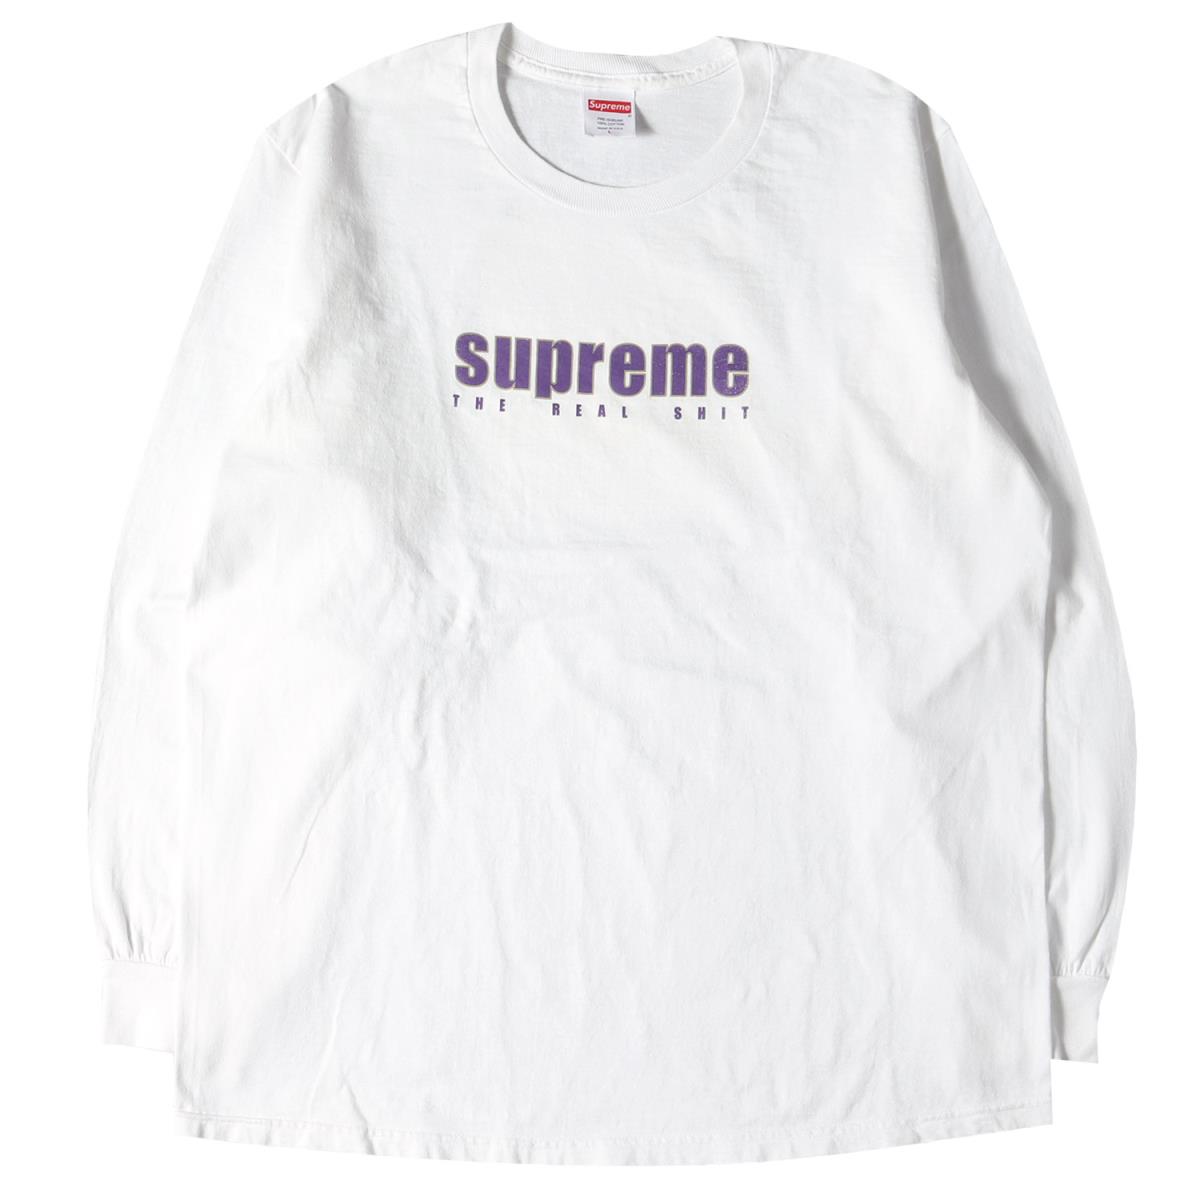 Supreme シュプリーム Tシャツ ブランドロゴ ロングスリーブtシャツ The Real Shit L S Tee 19ss ホワイト L メンズ K2936 Www Edurng Go Th